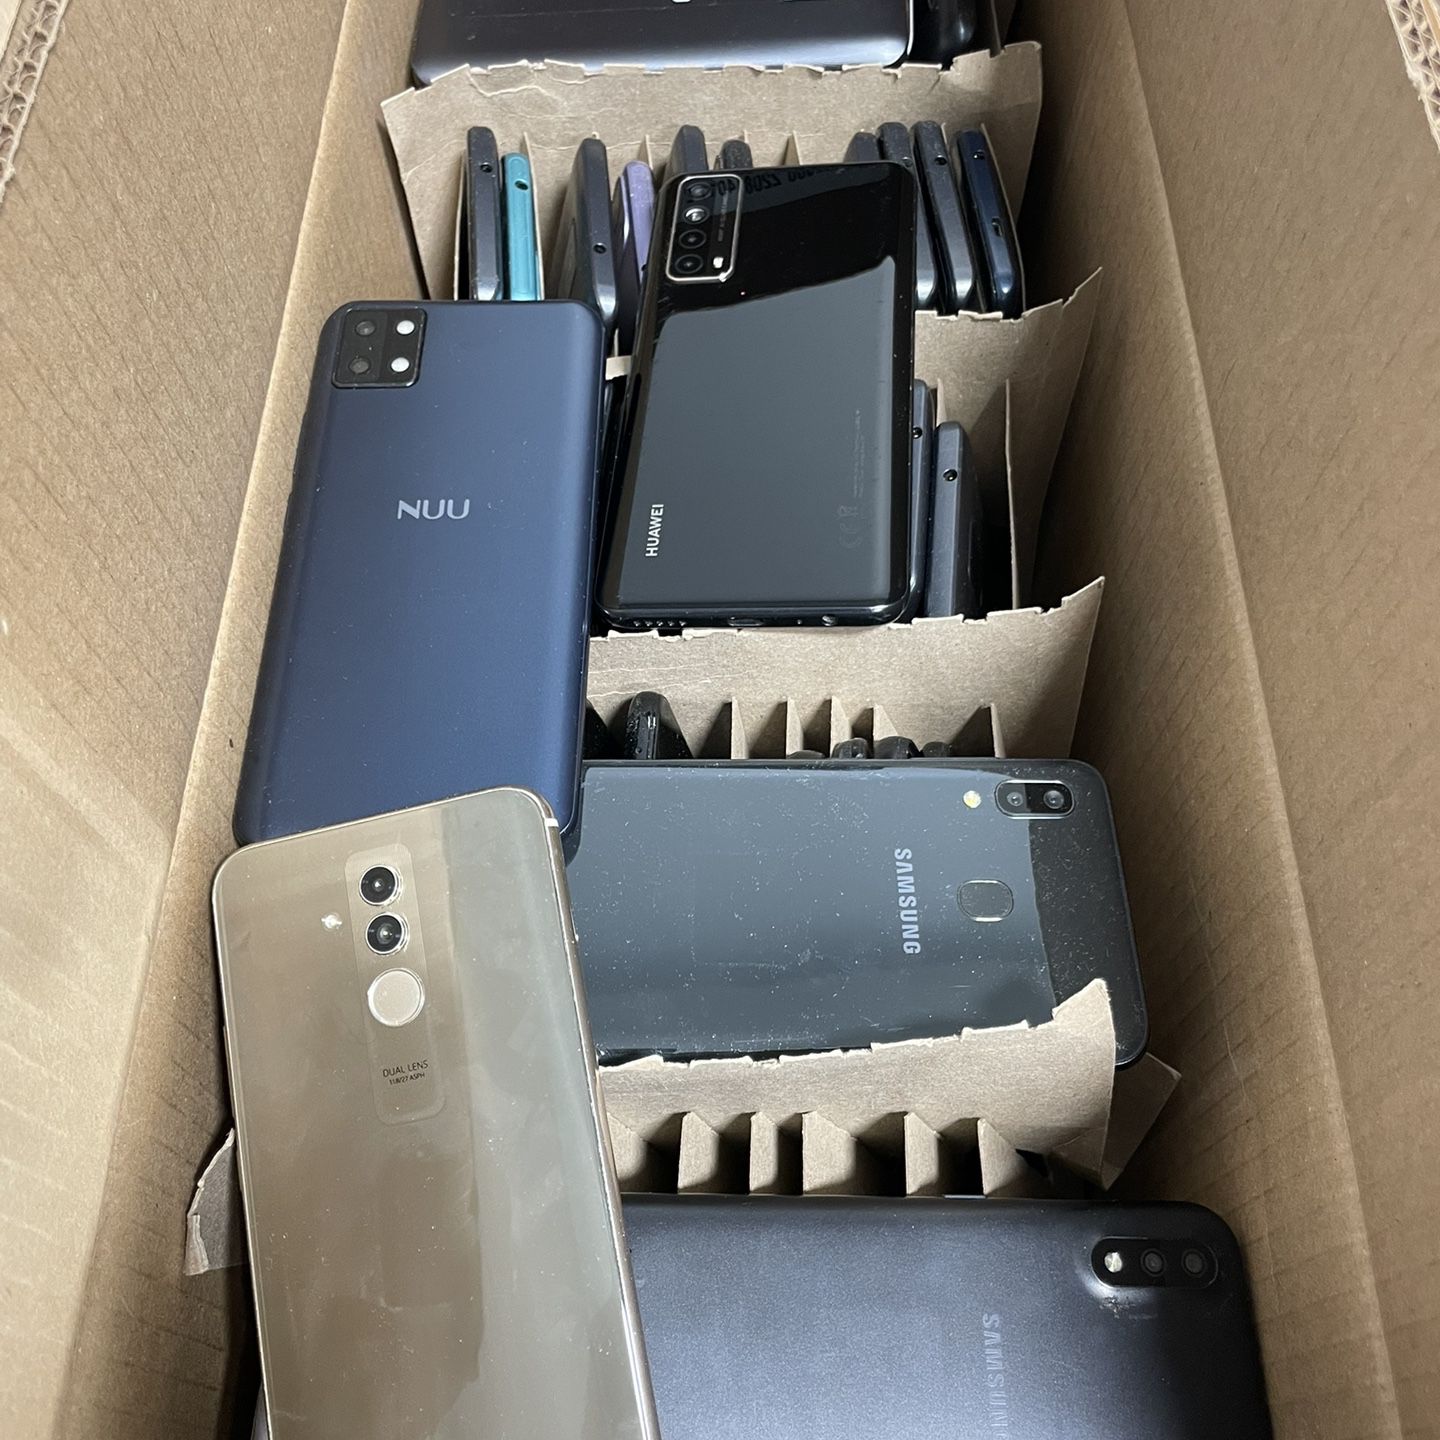 50x Mixed Samsung, Huawei, Nuu, & More Smartphones 